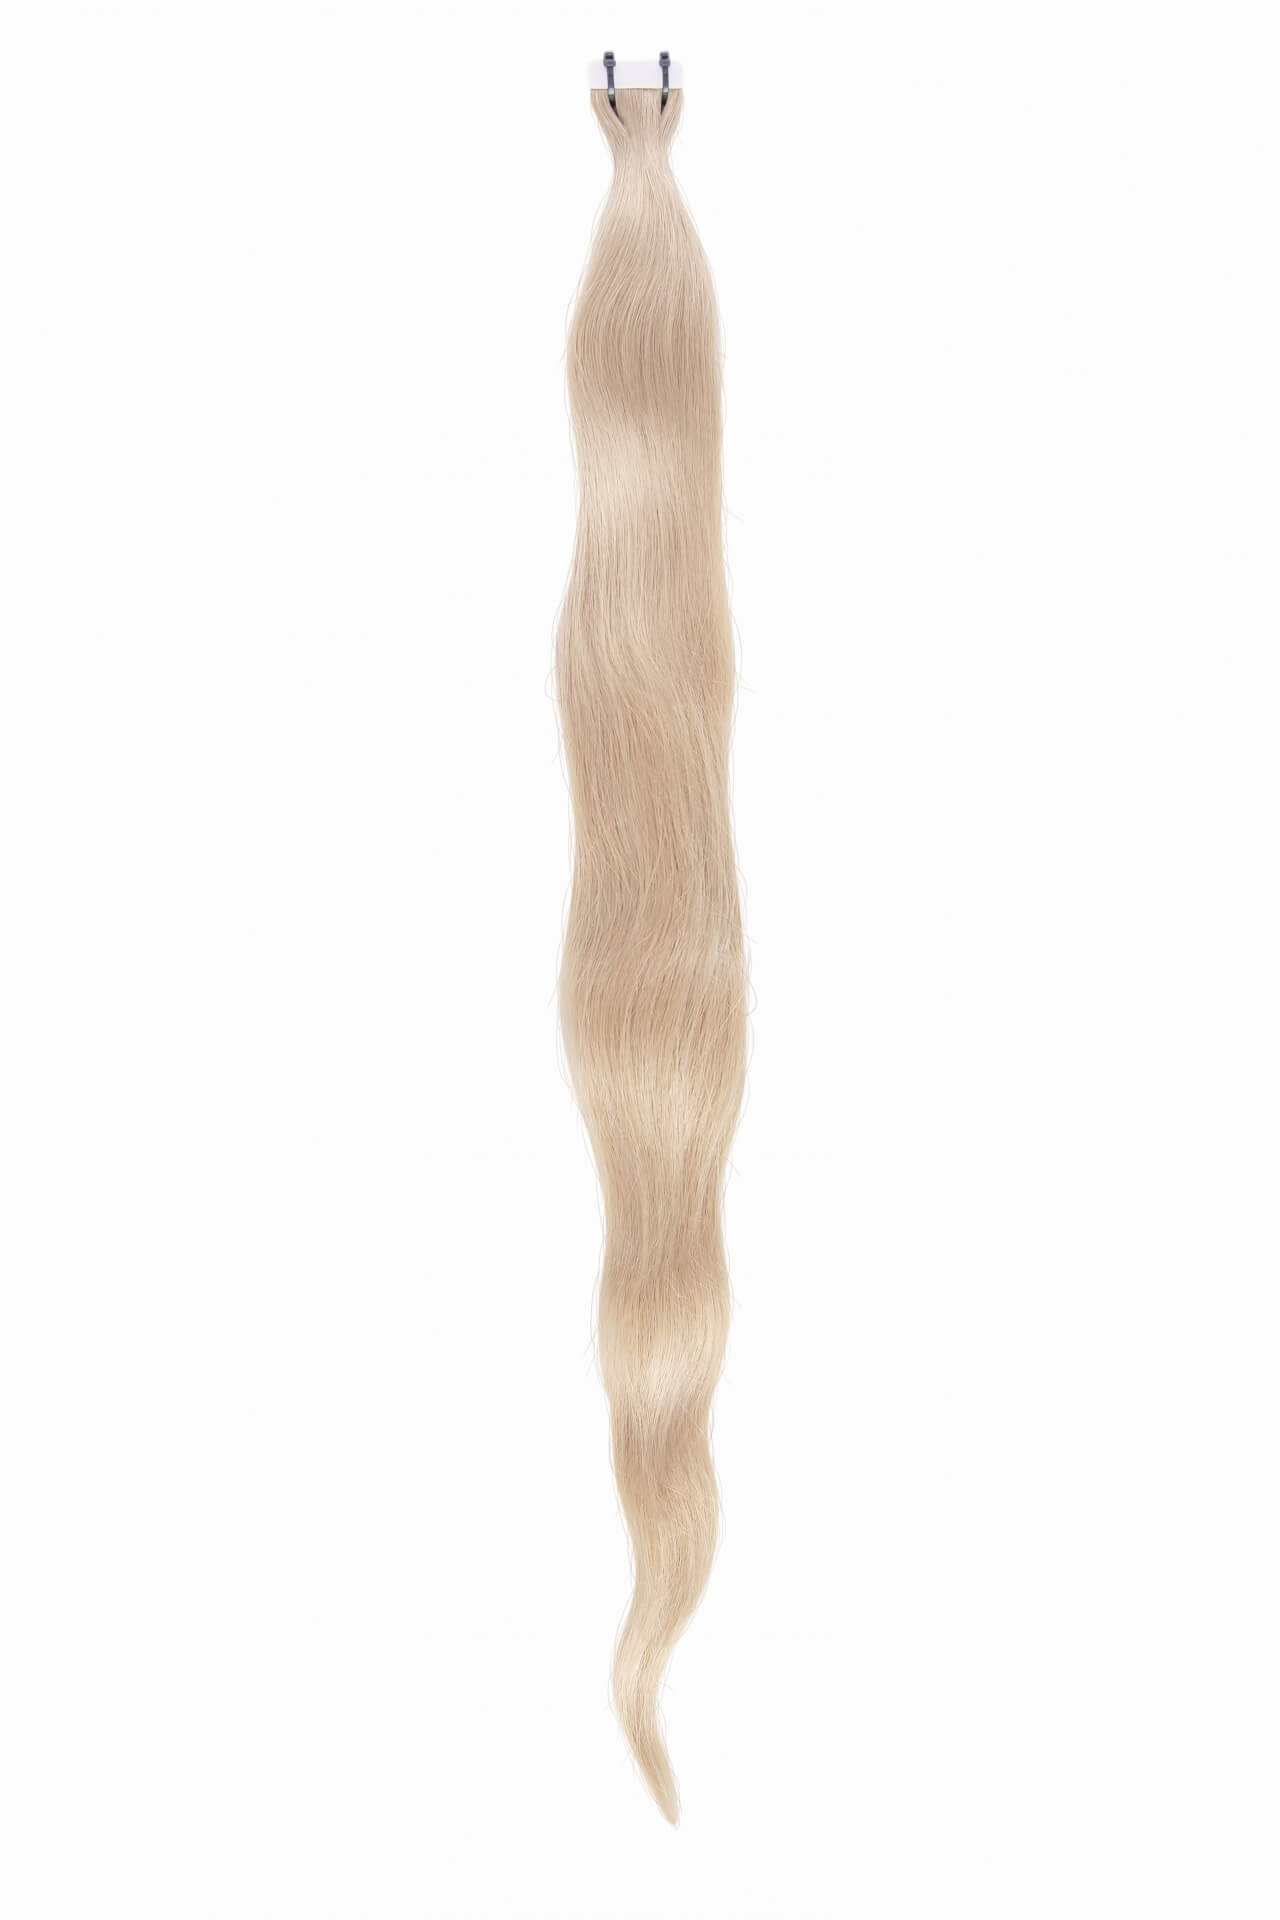 Vlasové pásky Original, odstín 1